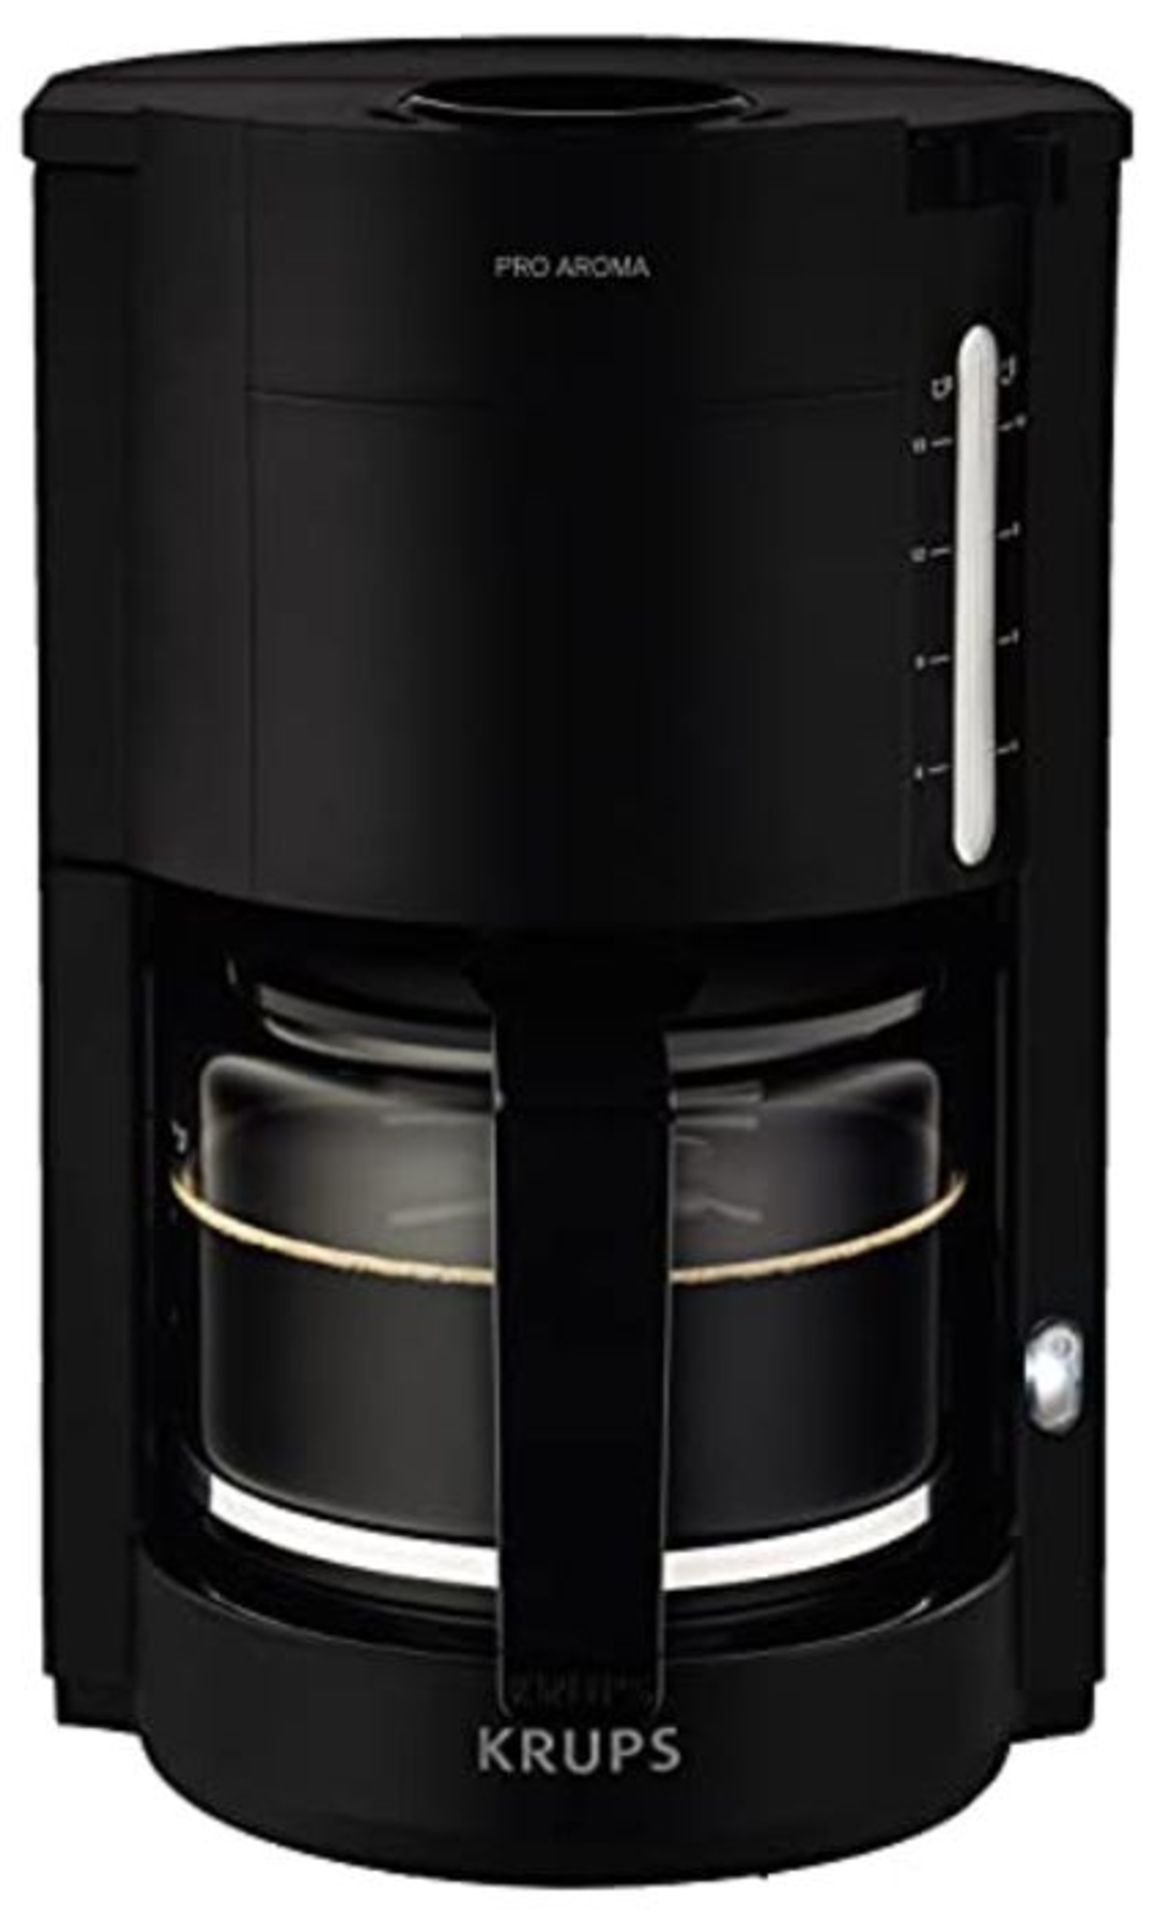 Krups F30908 Espresso machine 1.25L Black coffee maker - coffee makers (Freestanding,